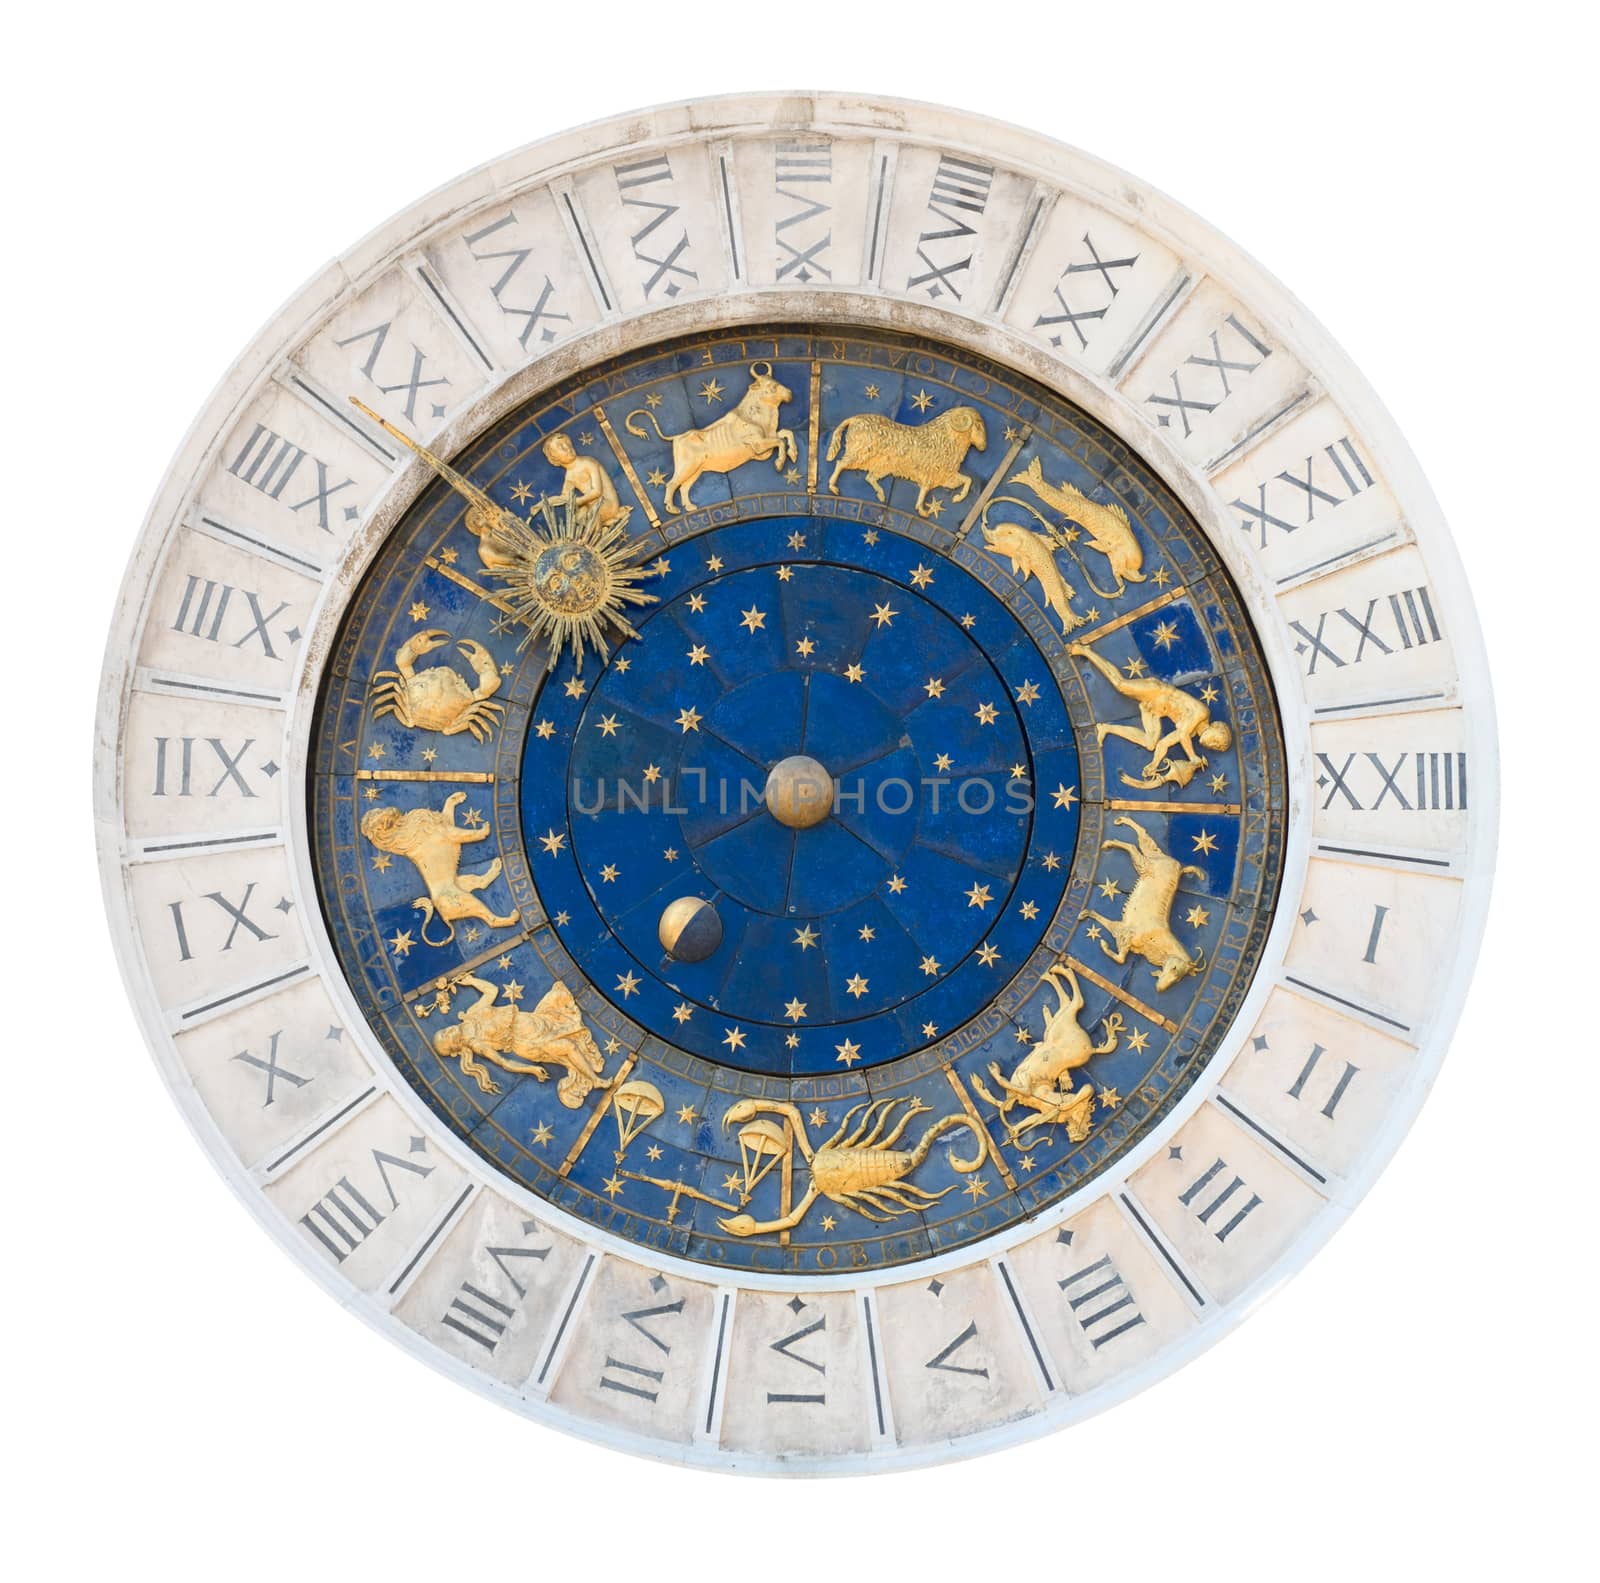 Venice clock tower dial cutout by vkstudio